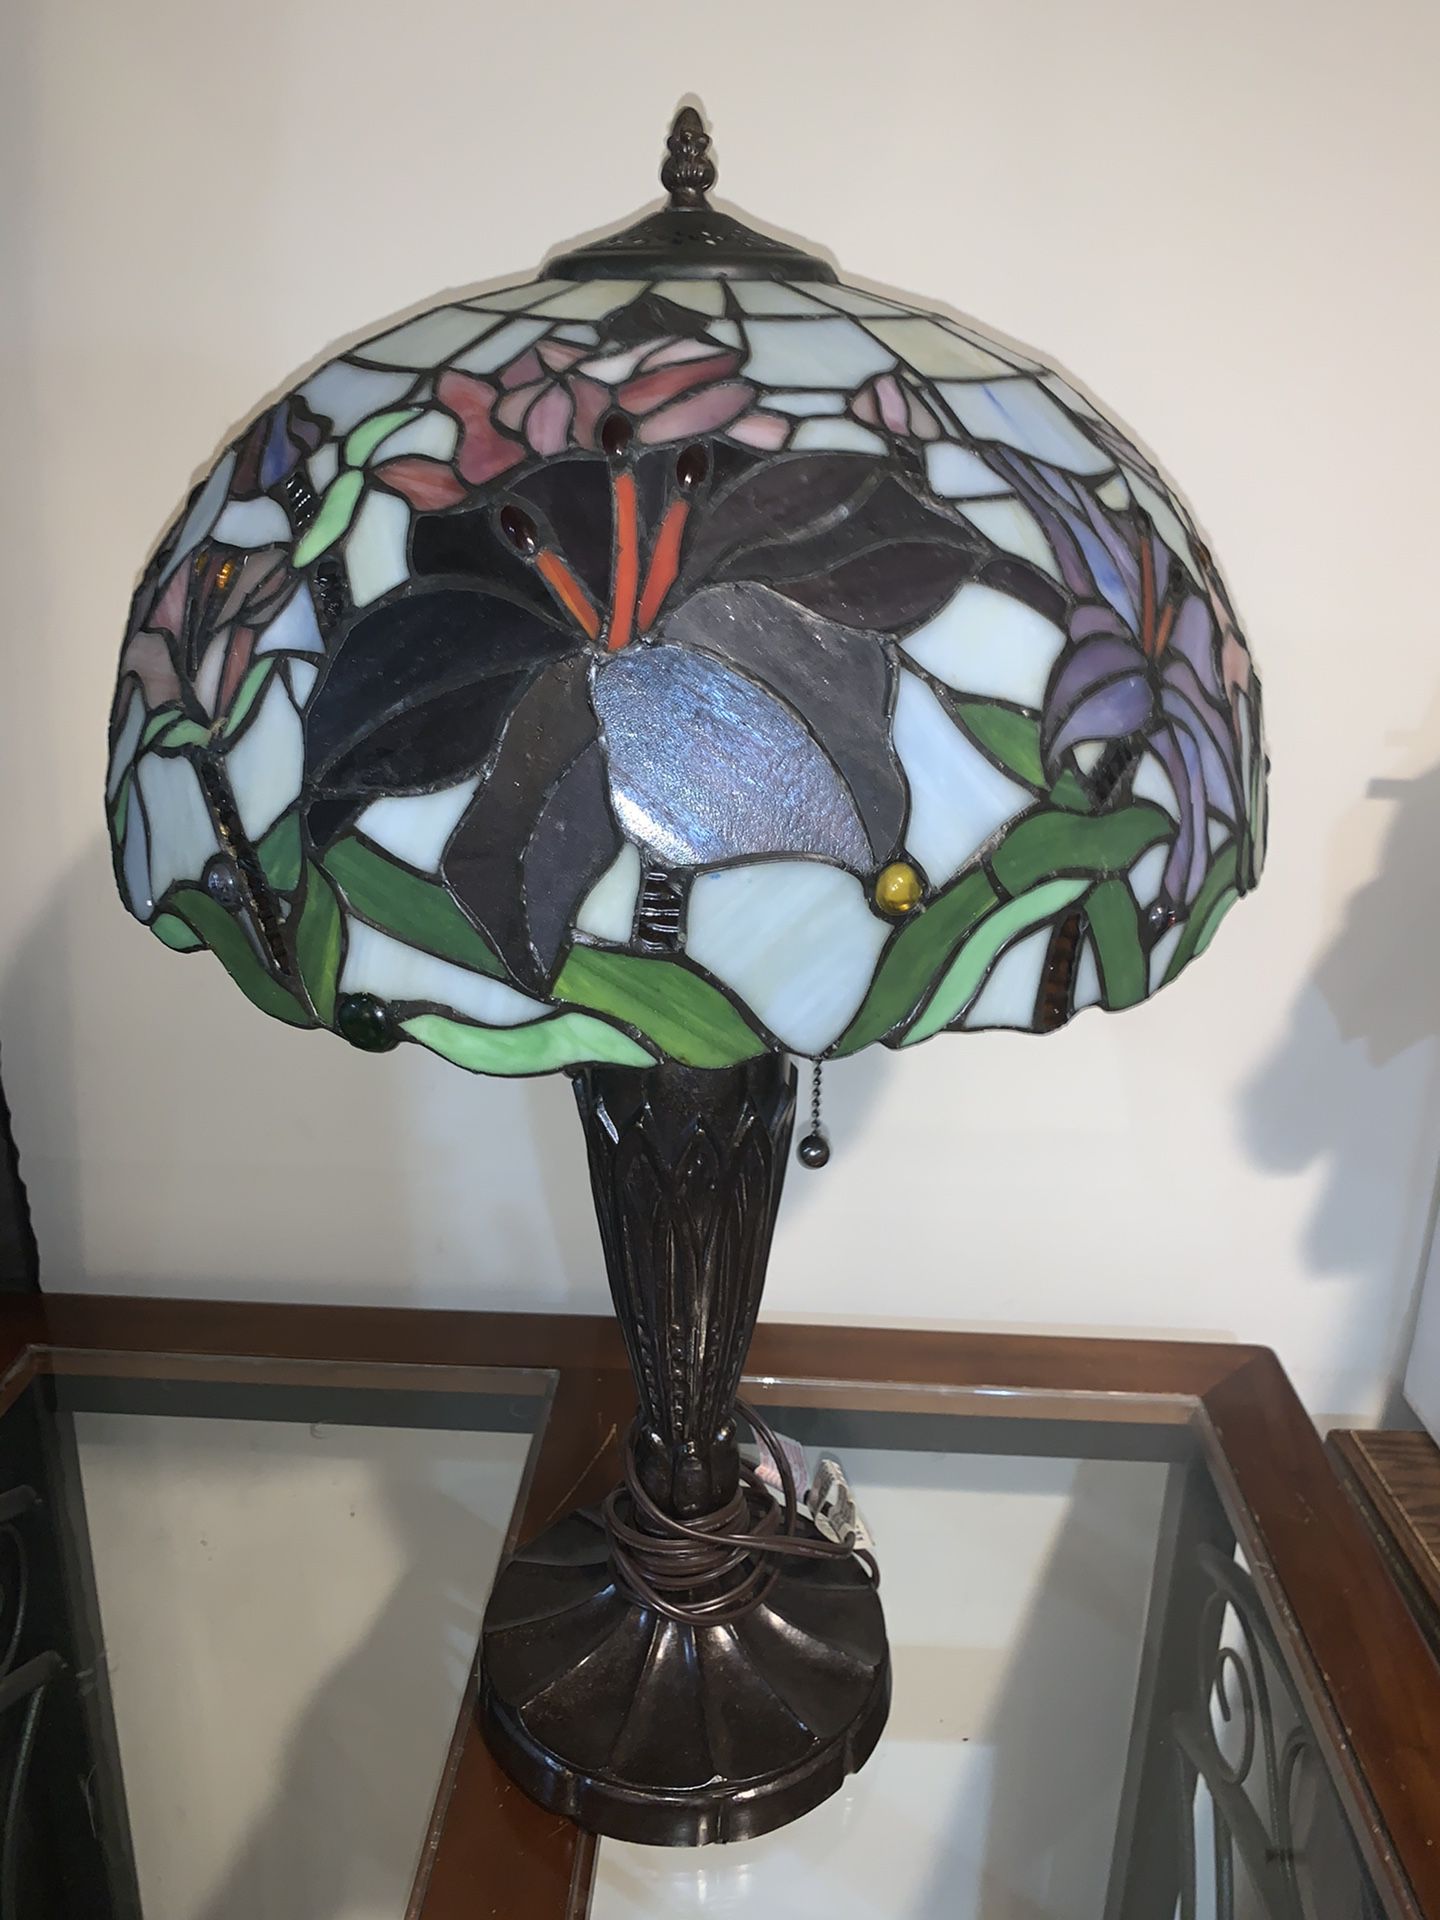 Vintage table top lamp